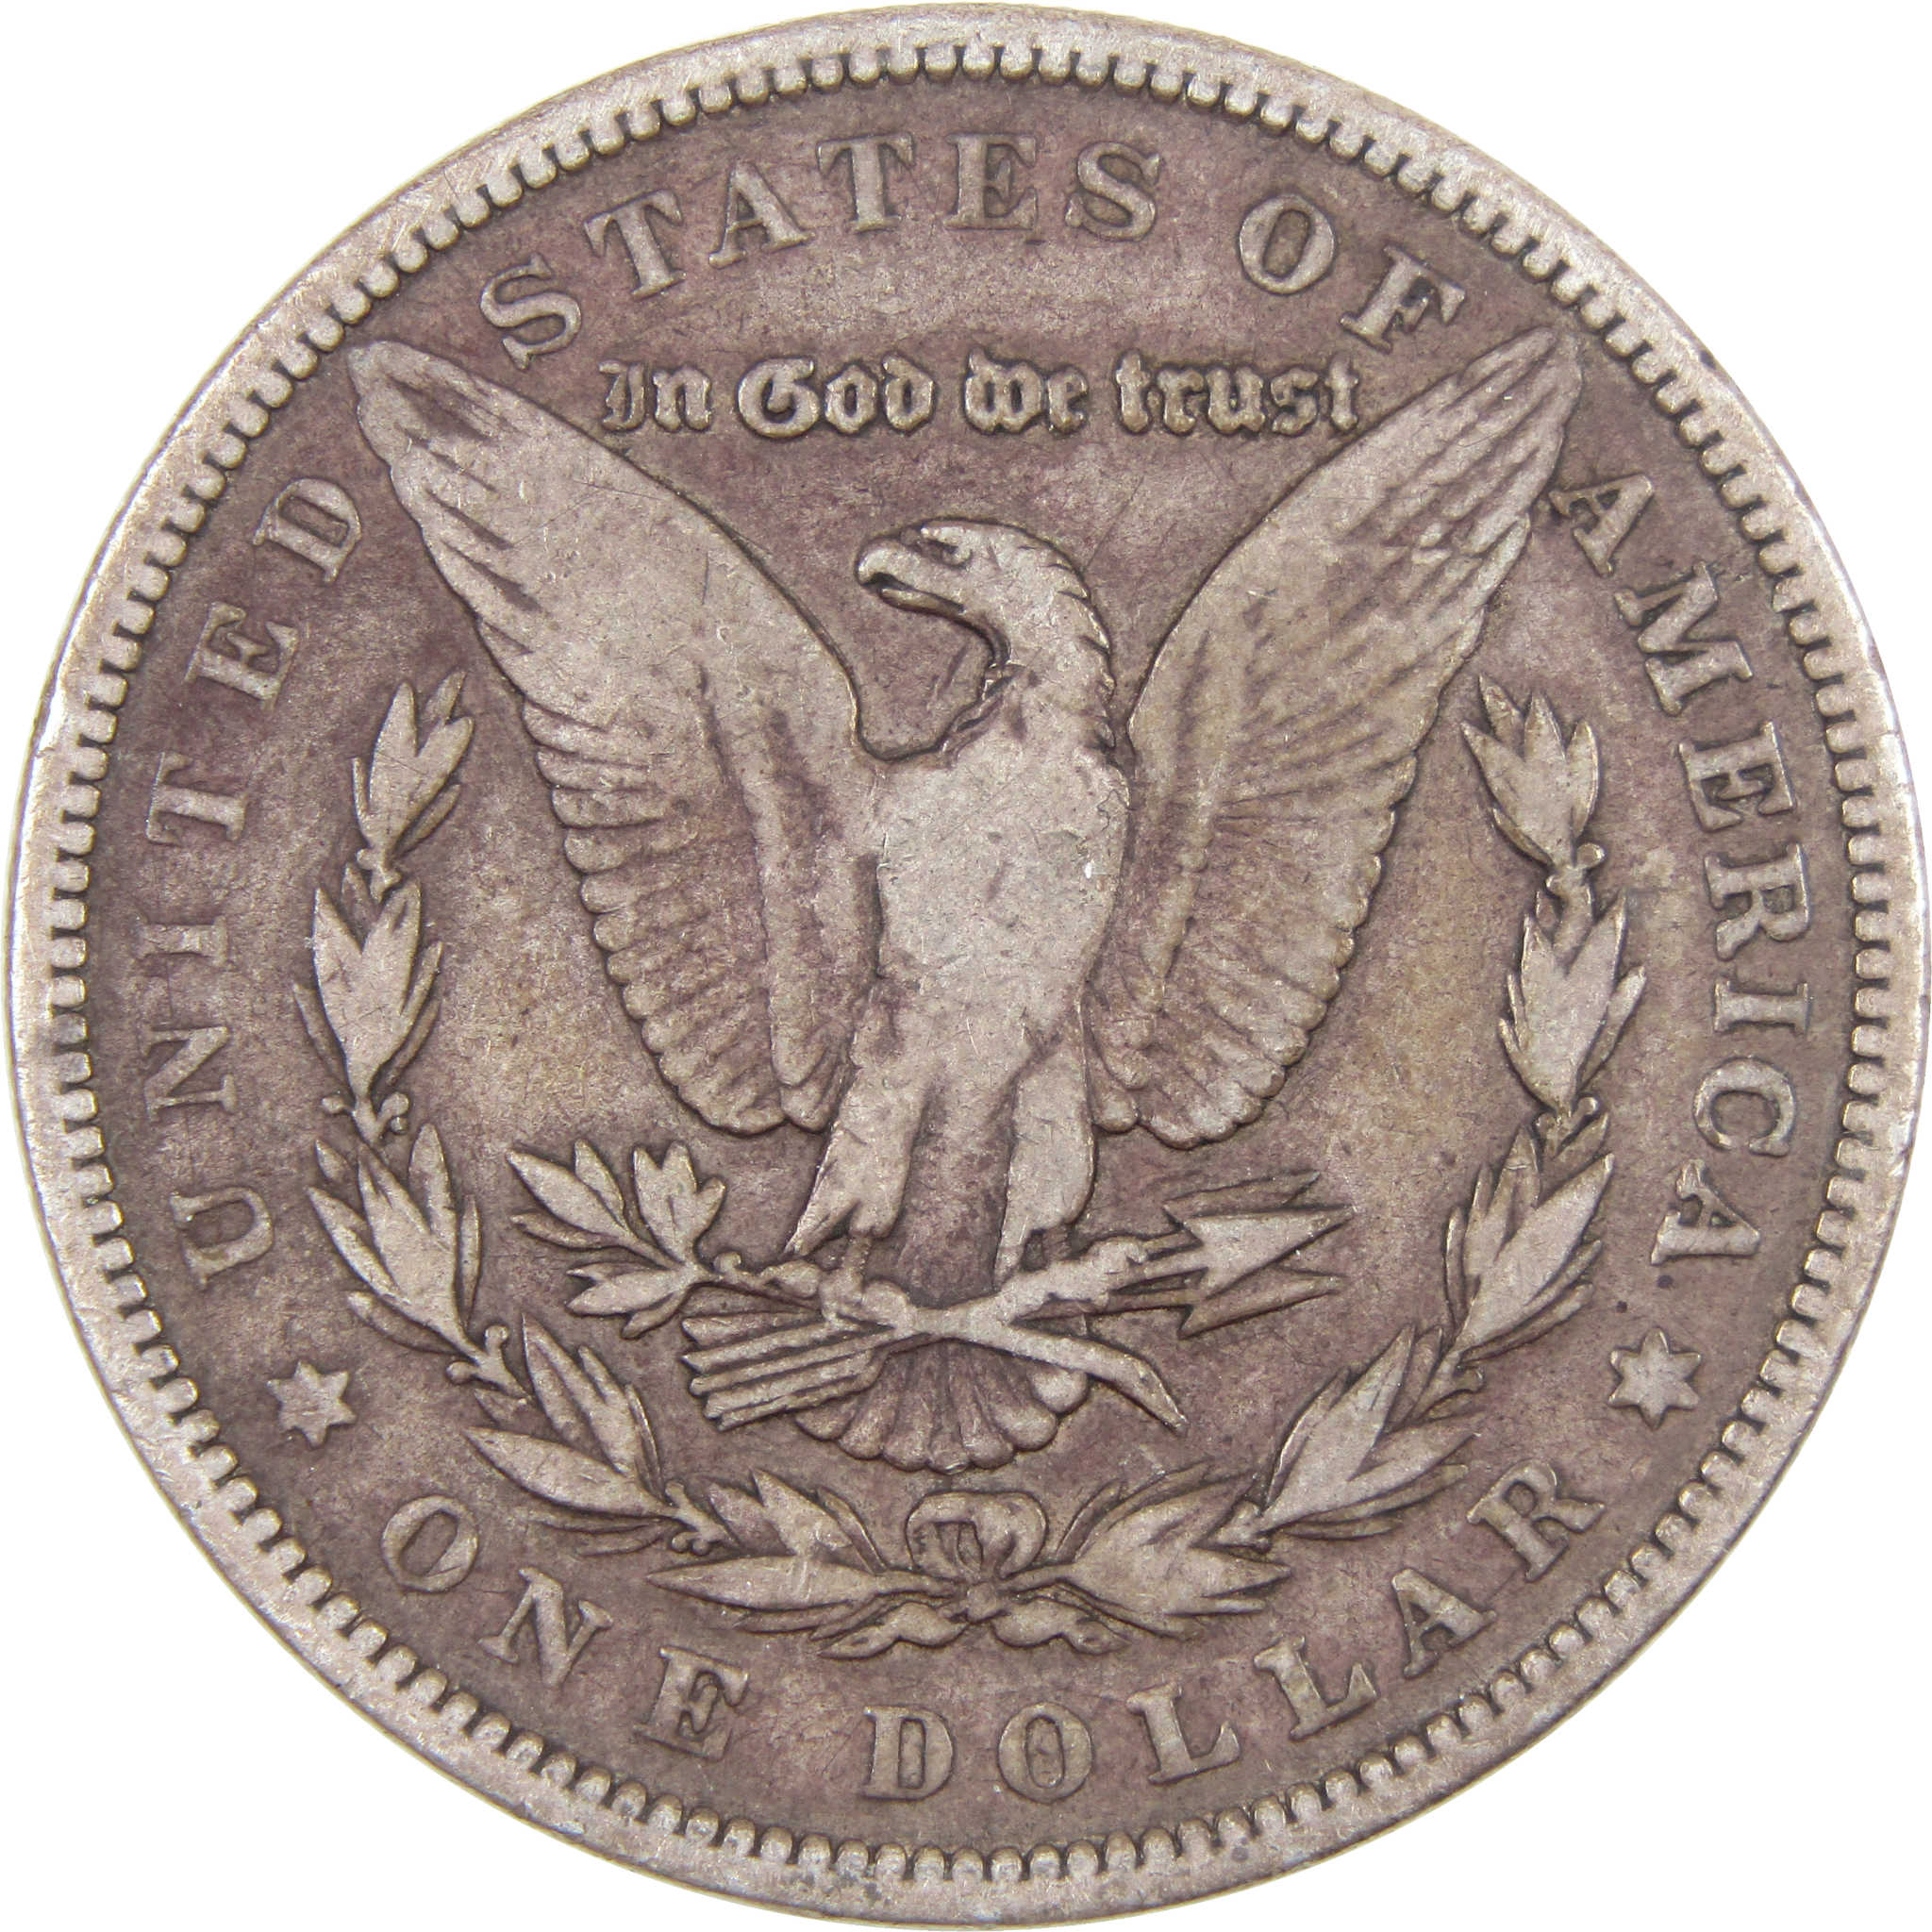 1878 7TF Rev 78 Morgan Dollar F Fine 90% Silver US Coin SKU:I3044 - Morgan coin - Morgan silver dollar - Morgan silver dollar for sale - Profile Coins &amp; Collectibles